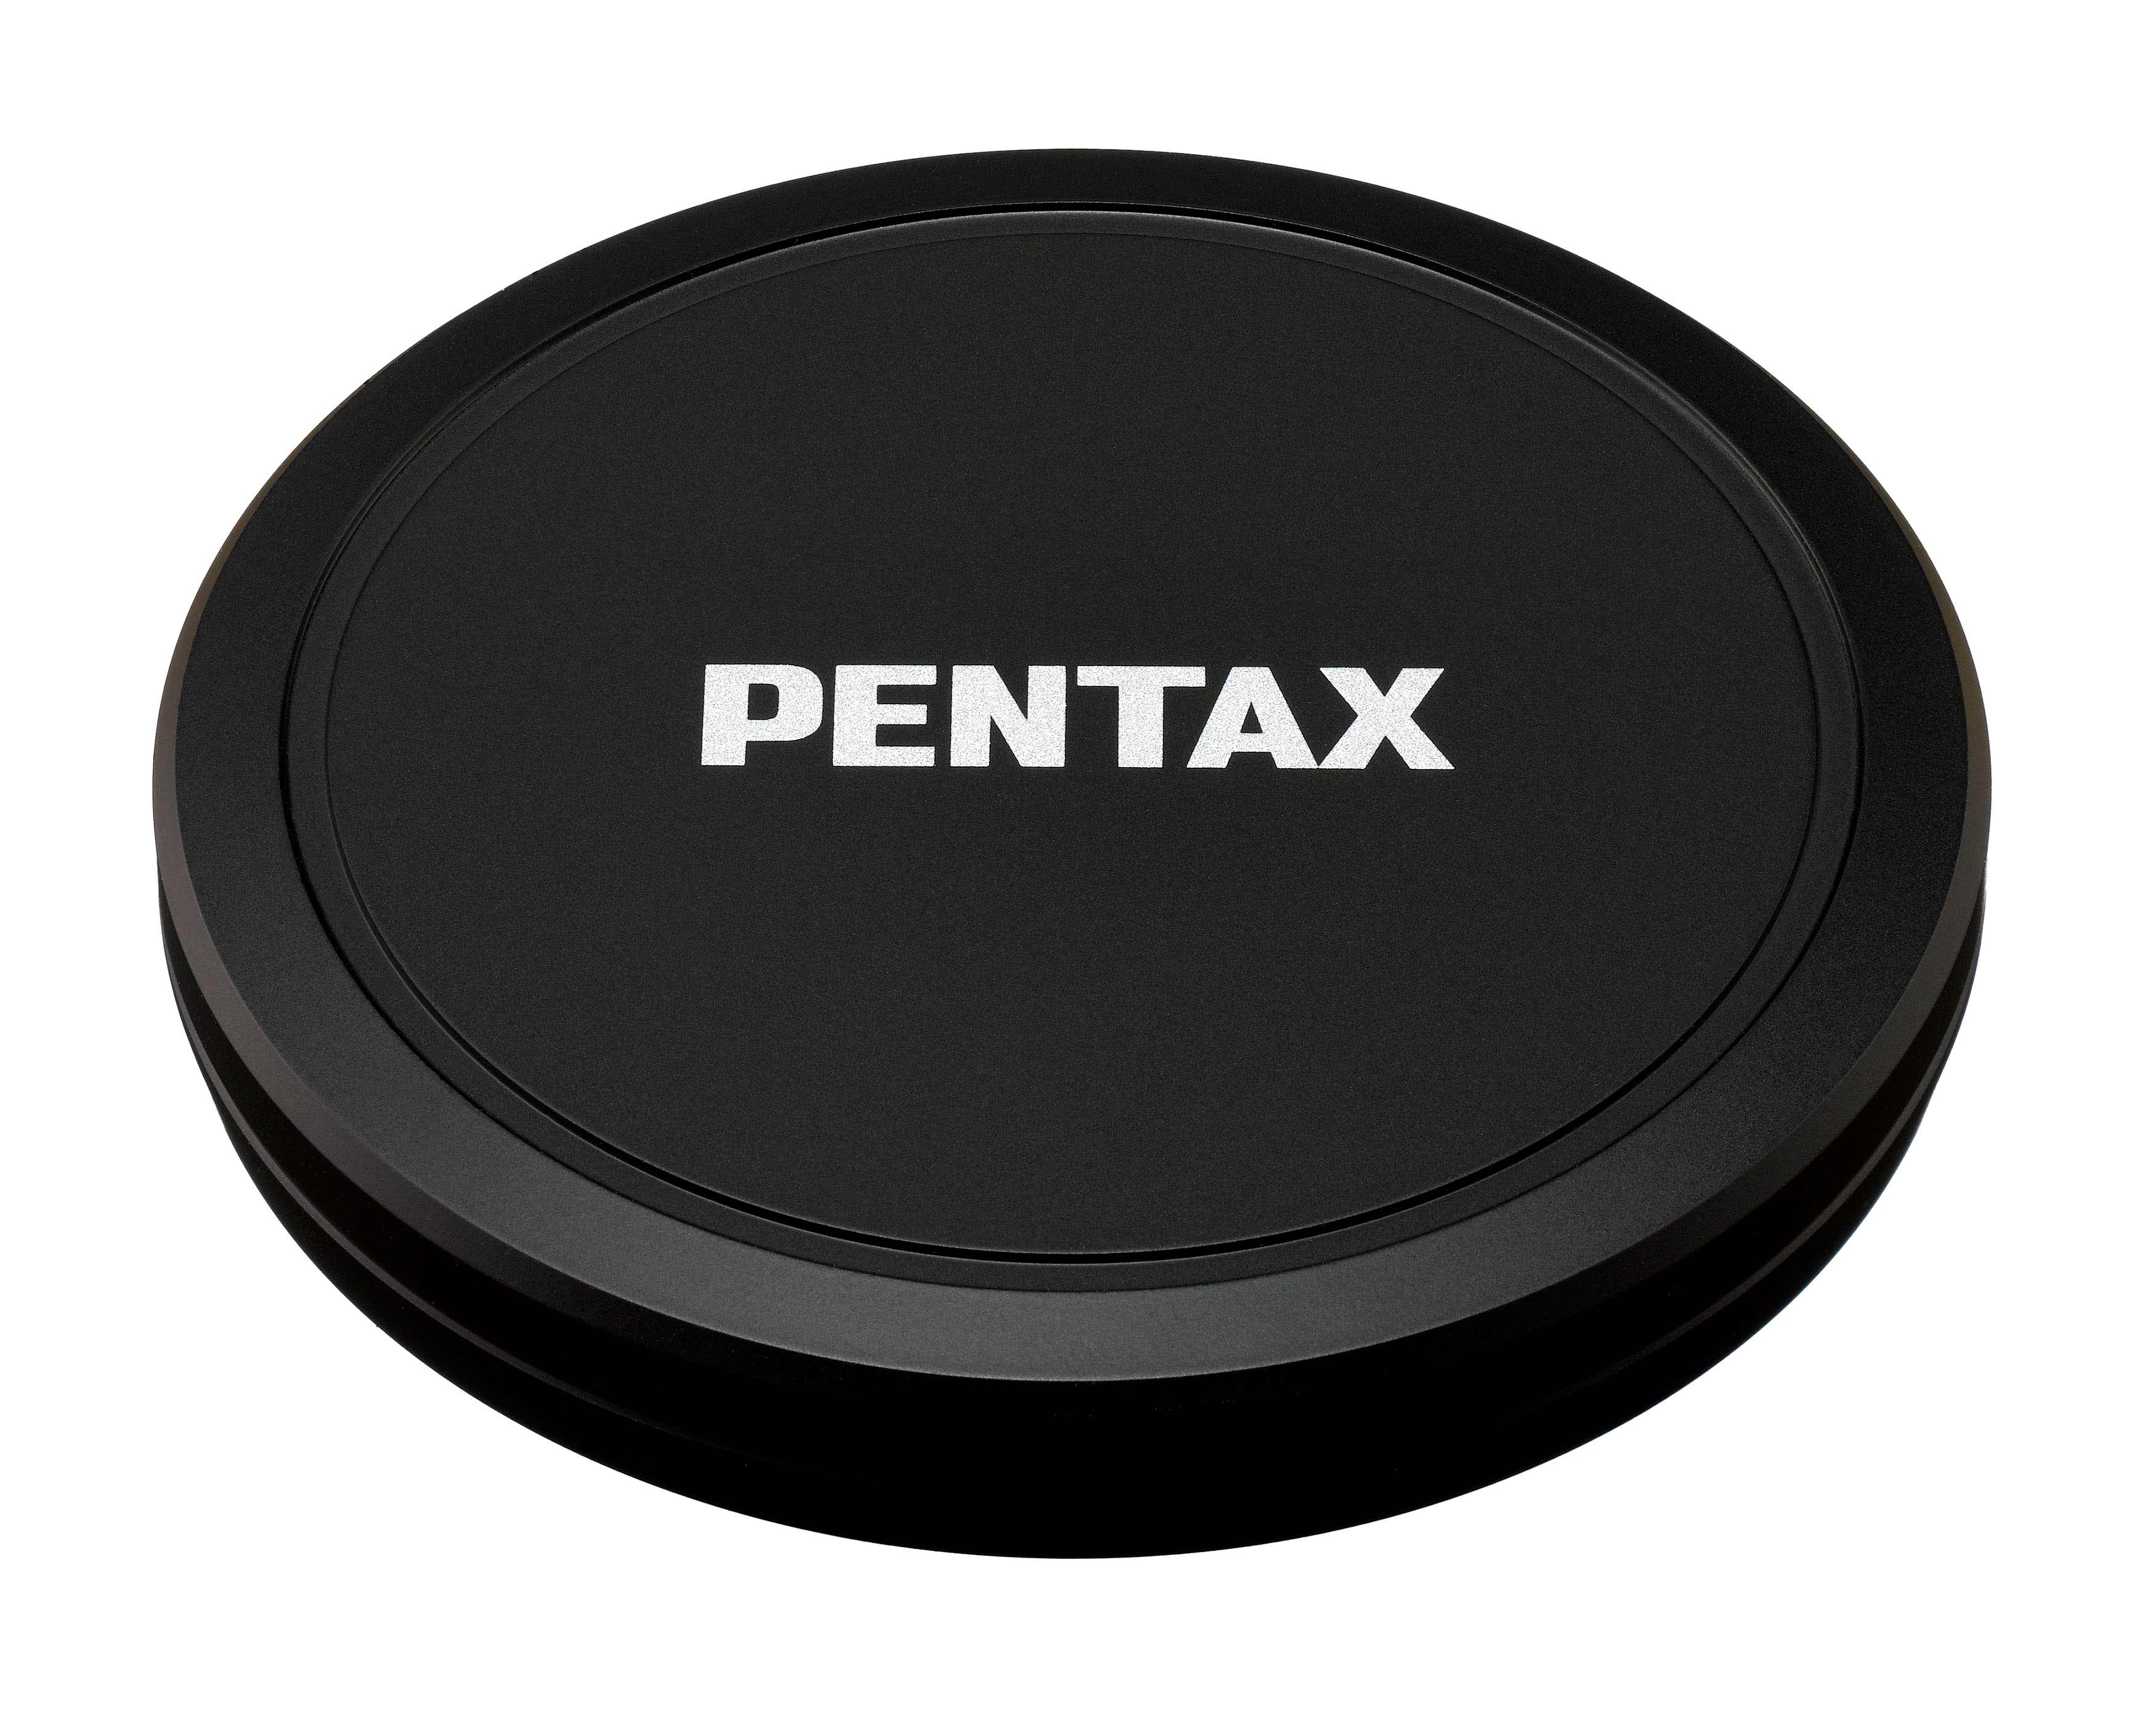 Pentax O-LW70A Lenscap for HDP DA 10-17mm f/3.5-4.5 ED Fisheye Lens